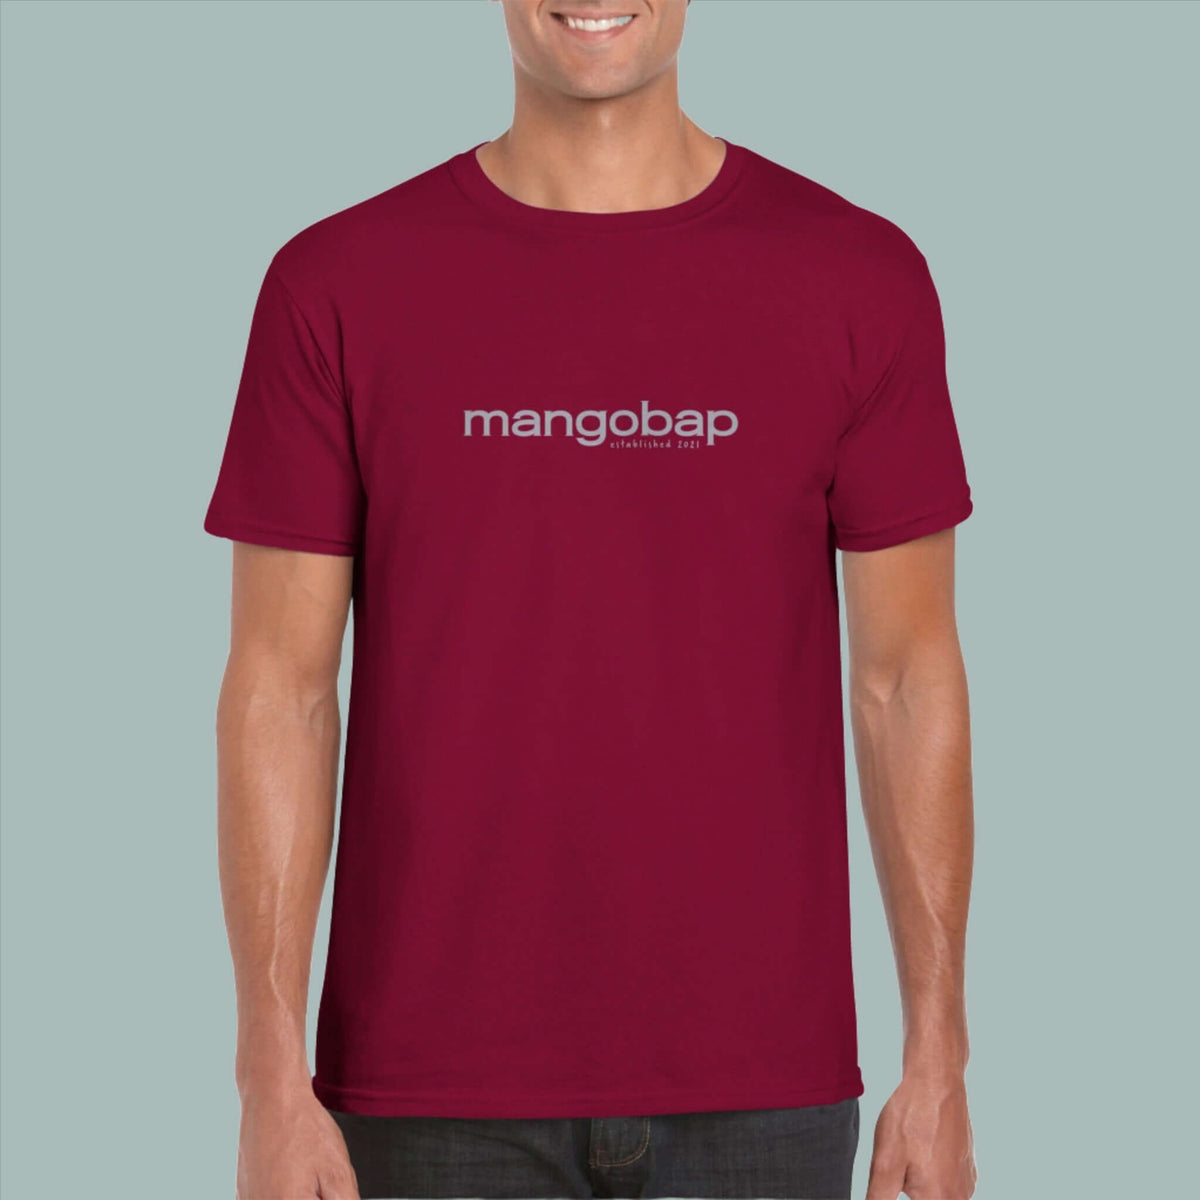 Mens MangoBap cardinal red t shirt - MangoBap